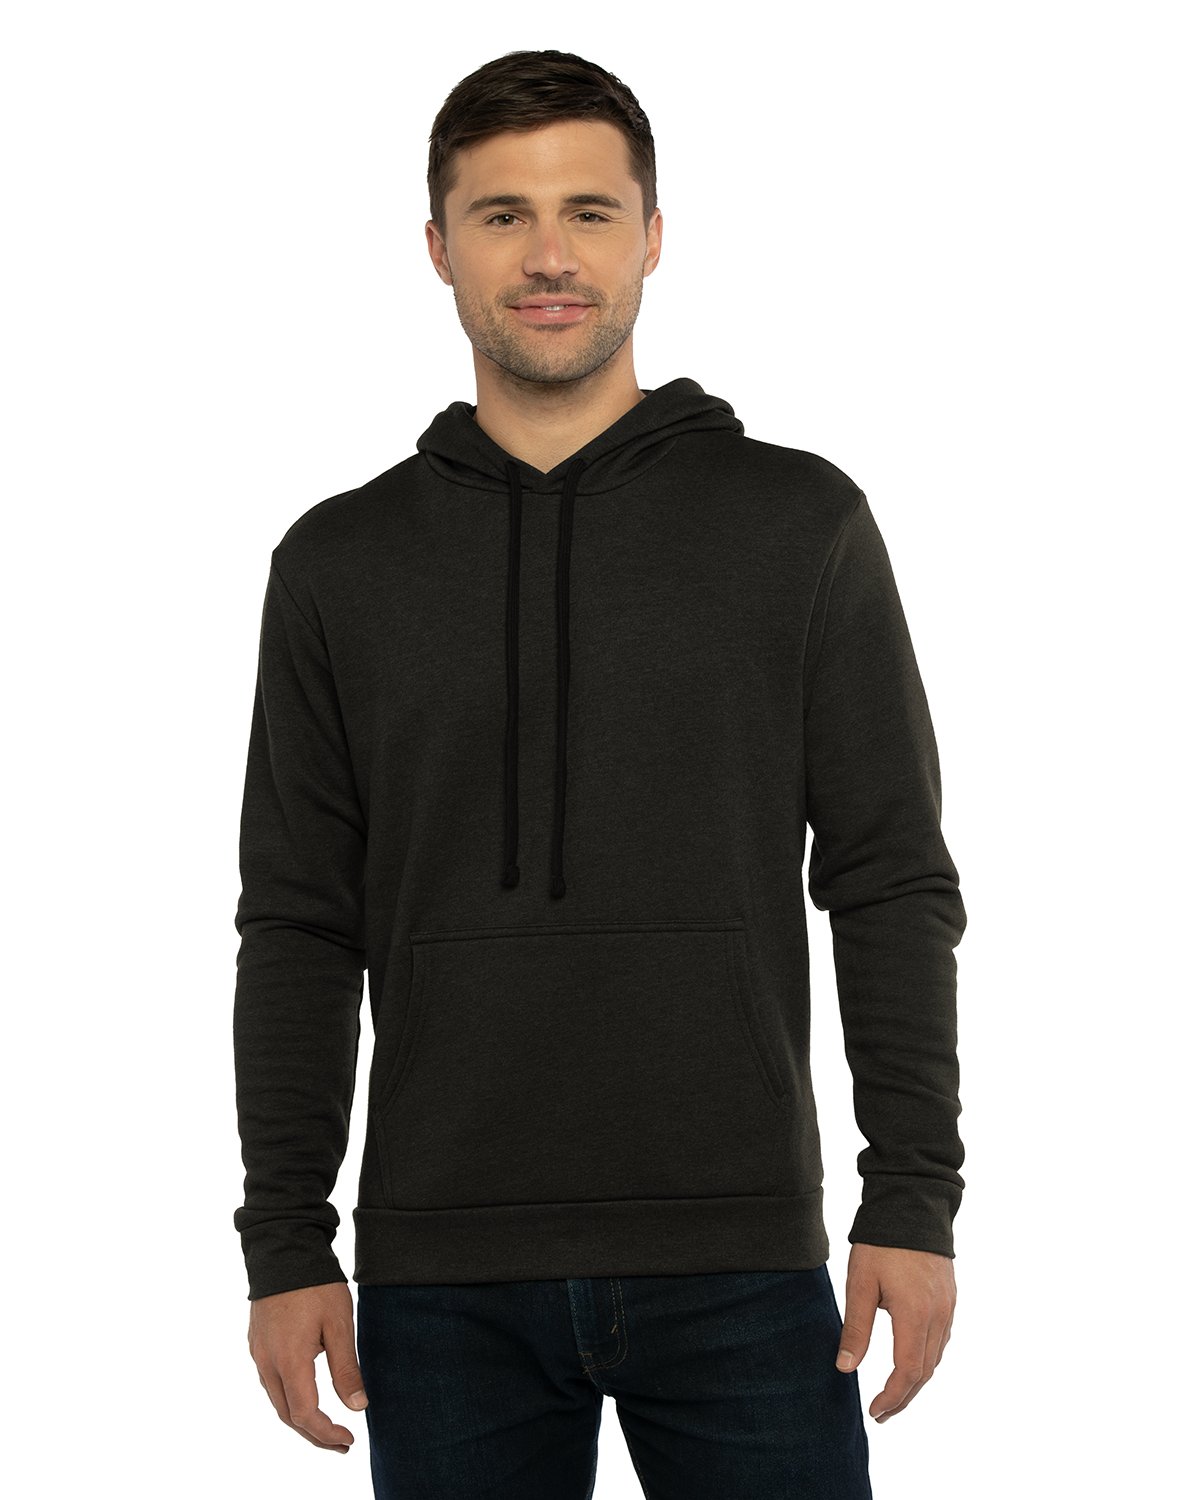 Next Level Apparel Unisex Malibu Pullover Hooded Sweatshirt | alphabroder